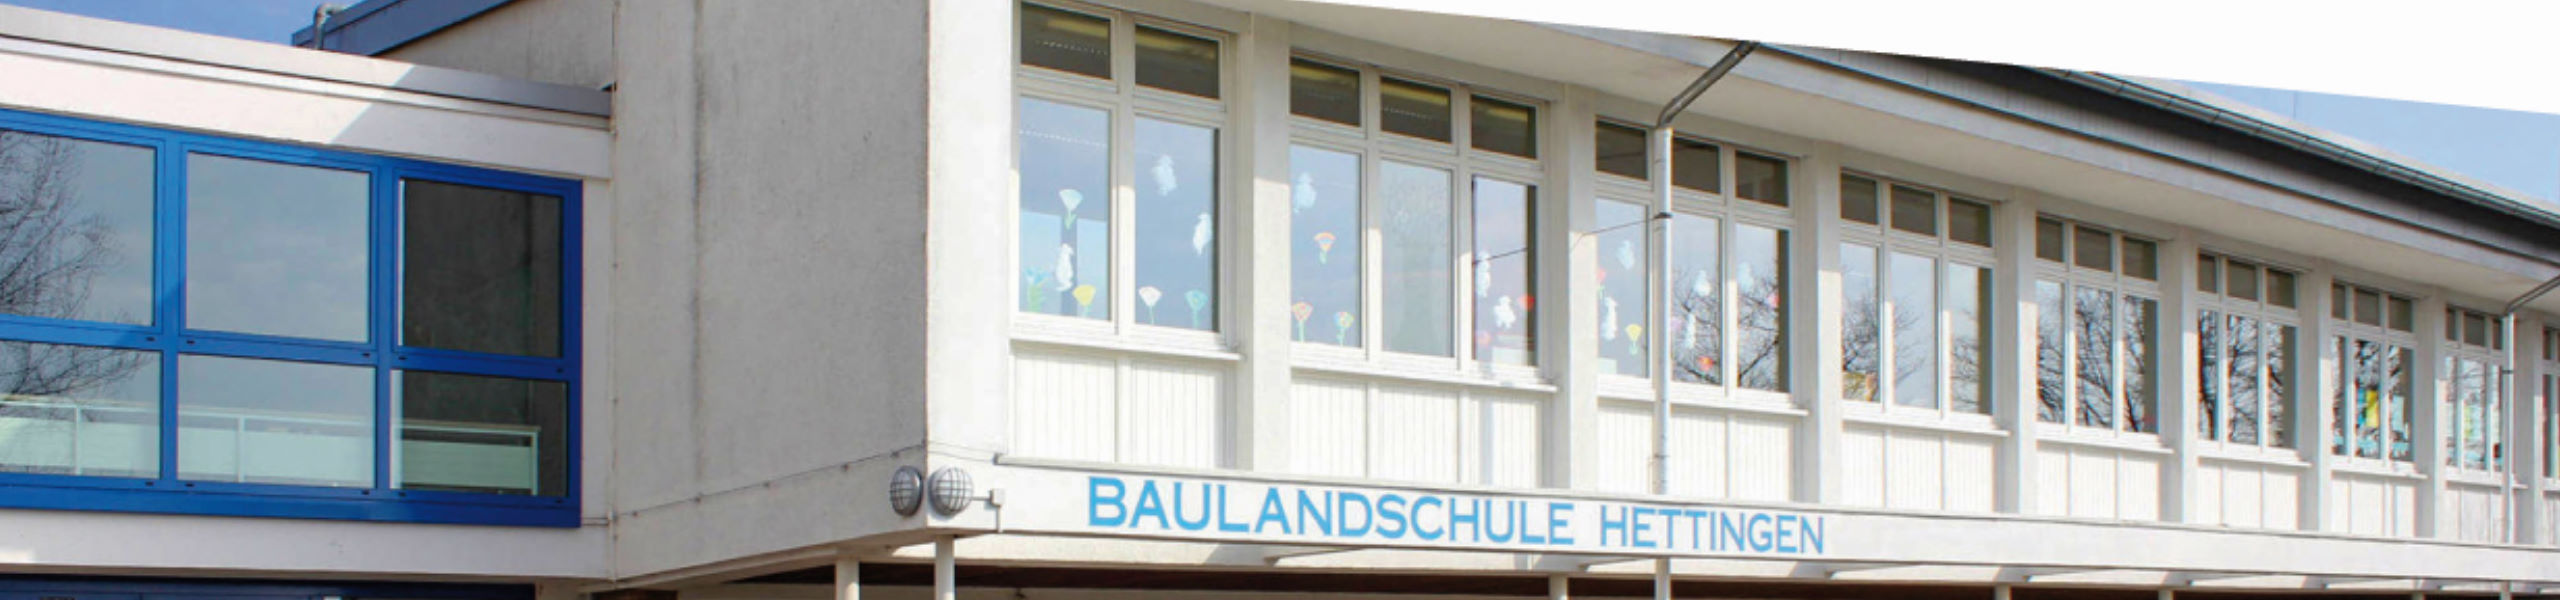 Baulandschule Hettingen - Medienprävention an der Schule